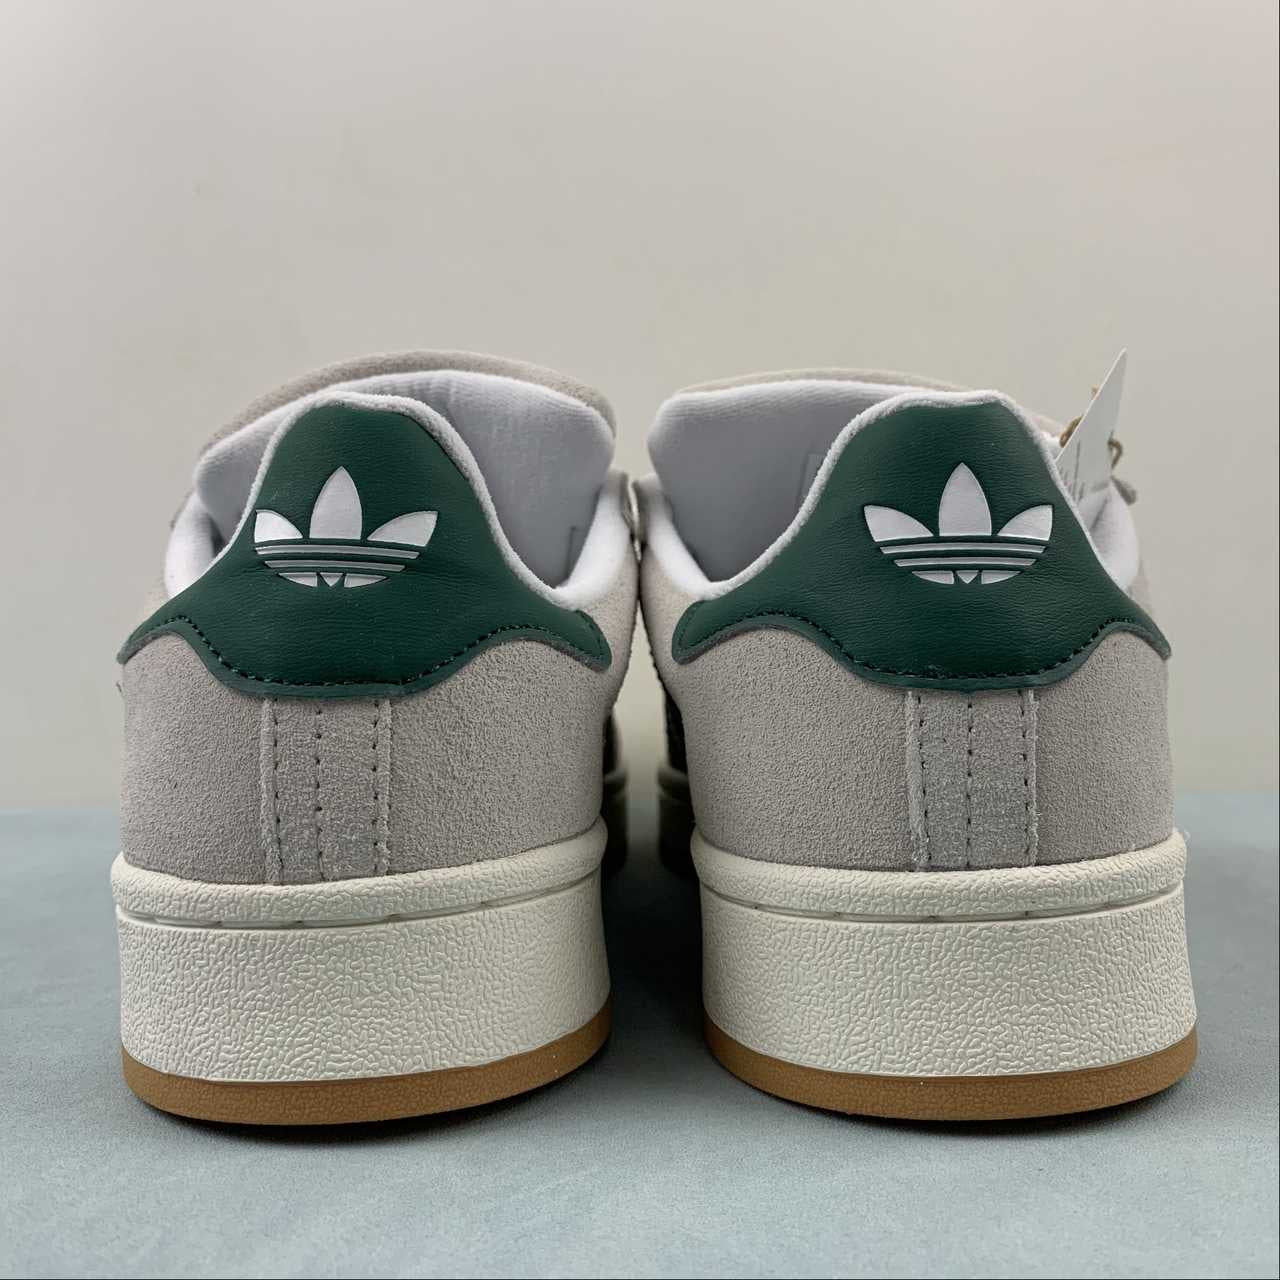 Adidas campus green grey shoes